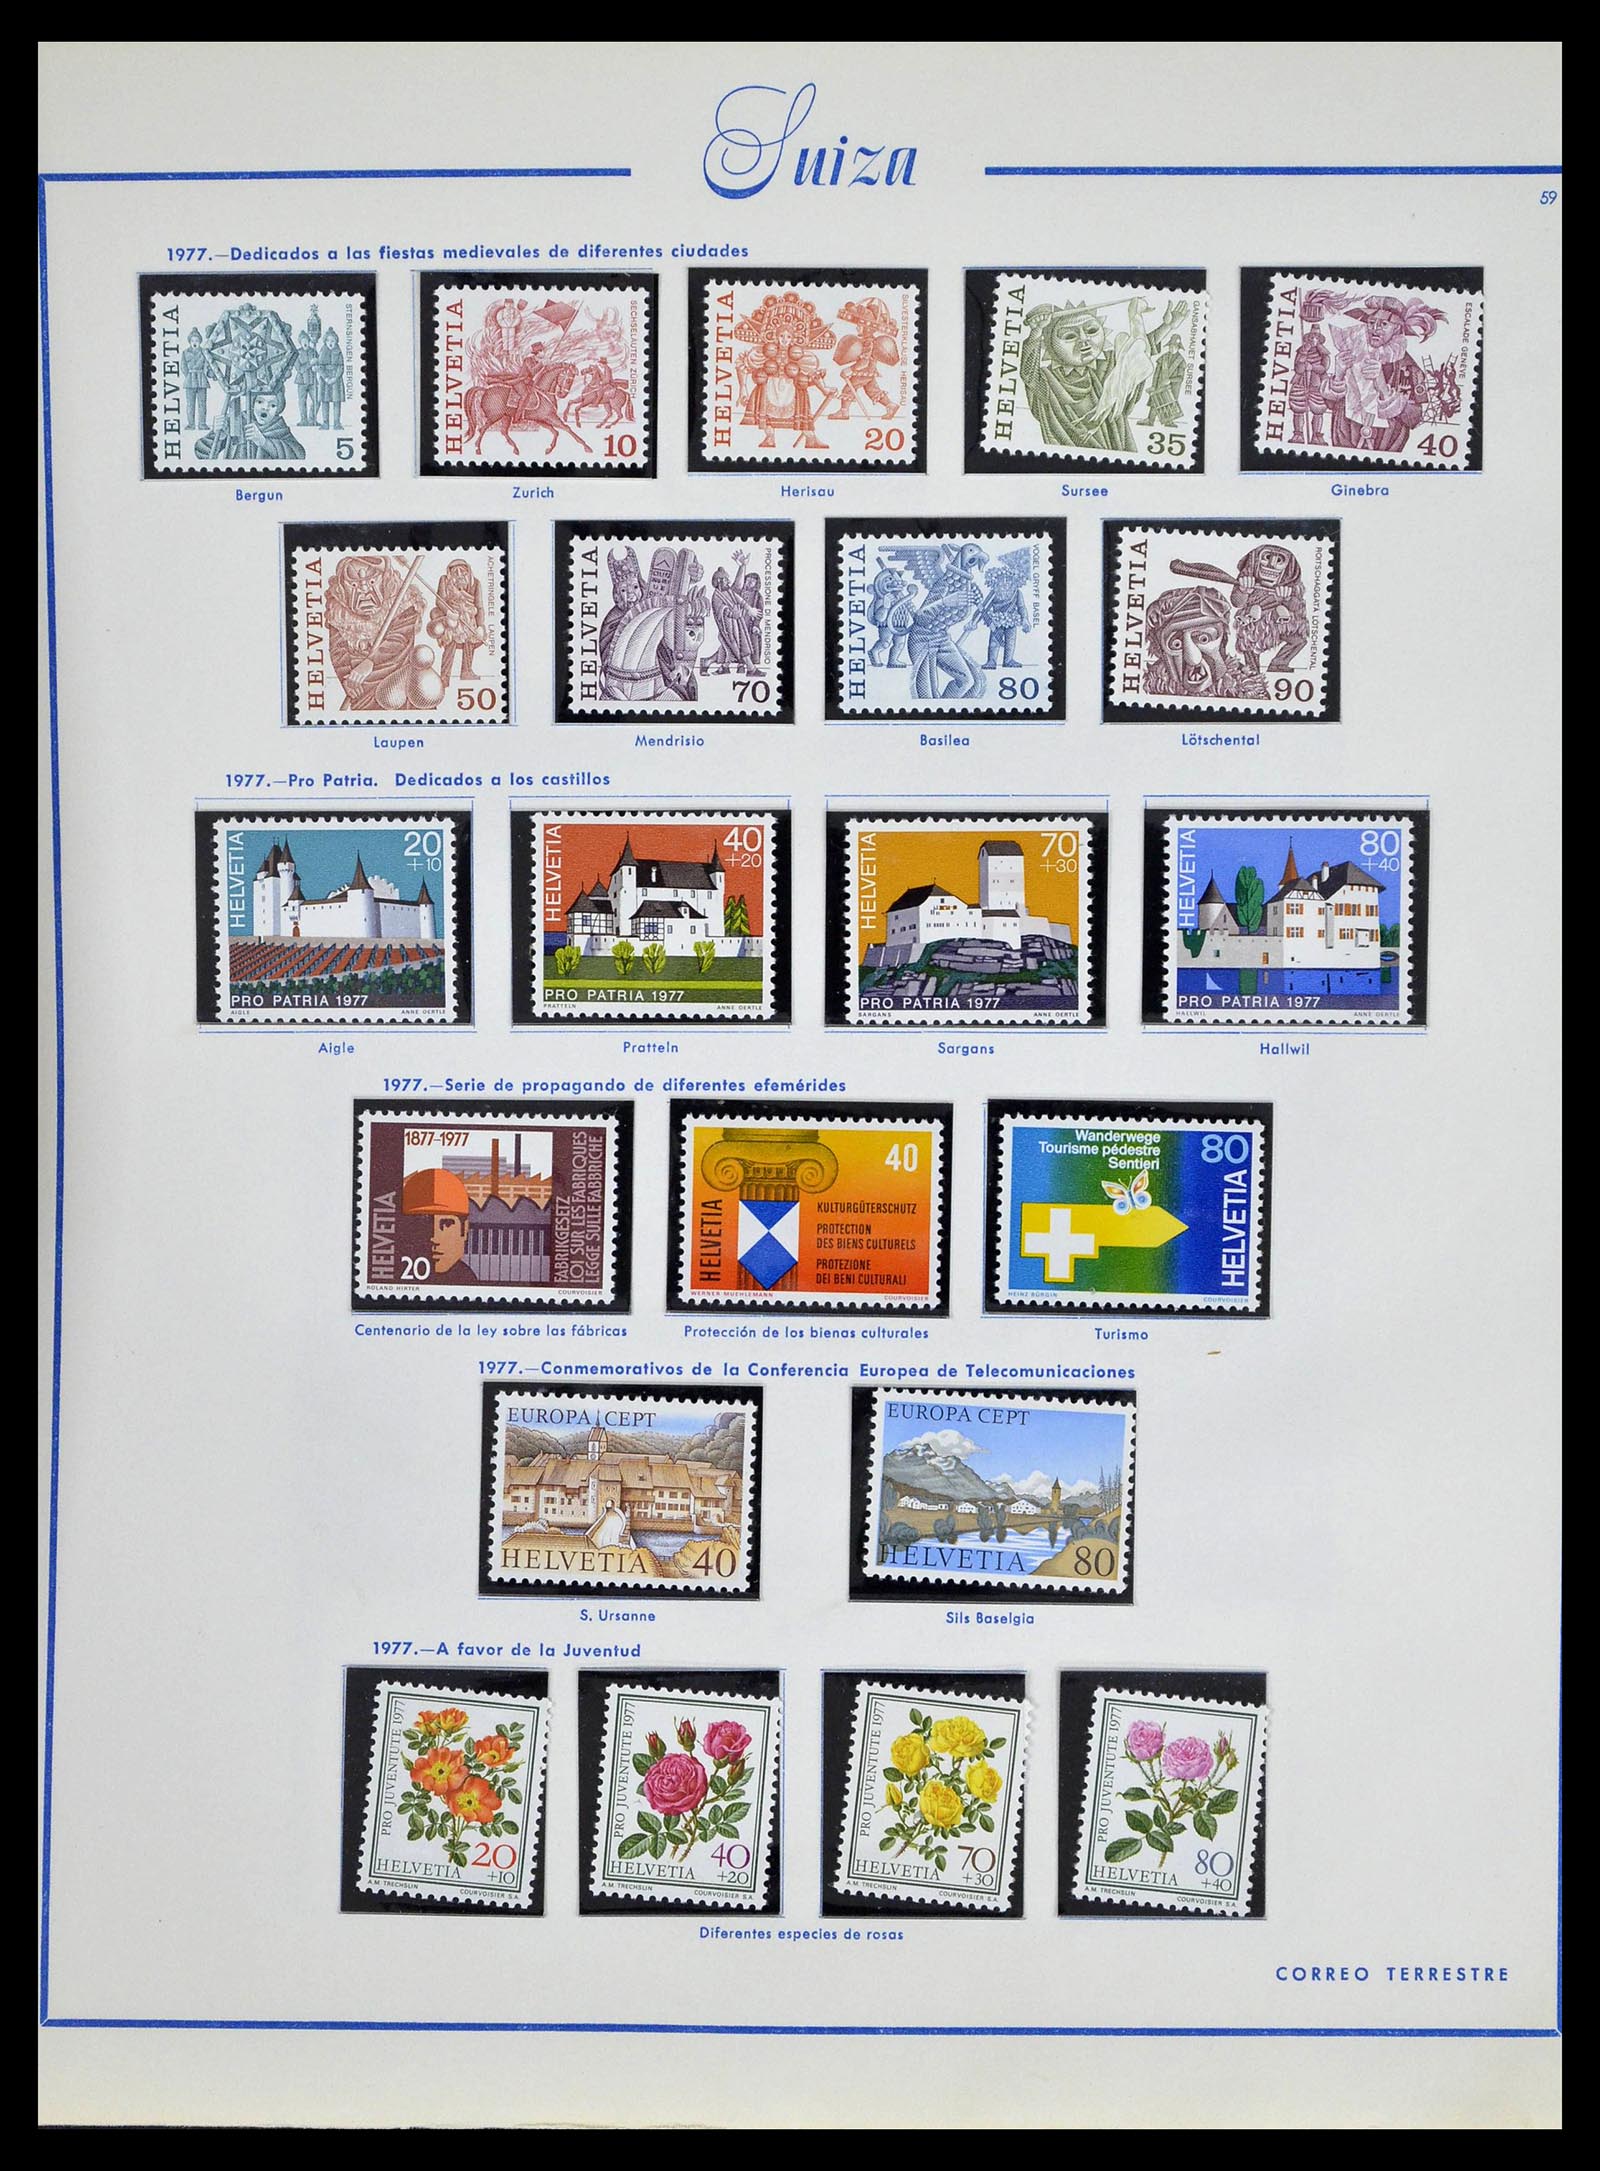 39217 0065 - Stamp collection 39217 Switzerland 1850-1986.